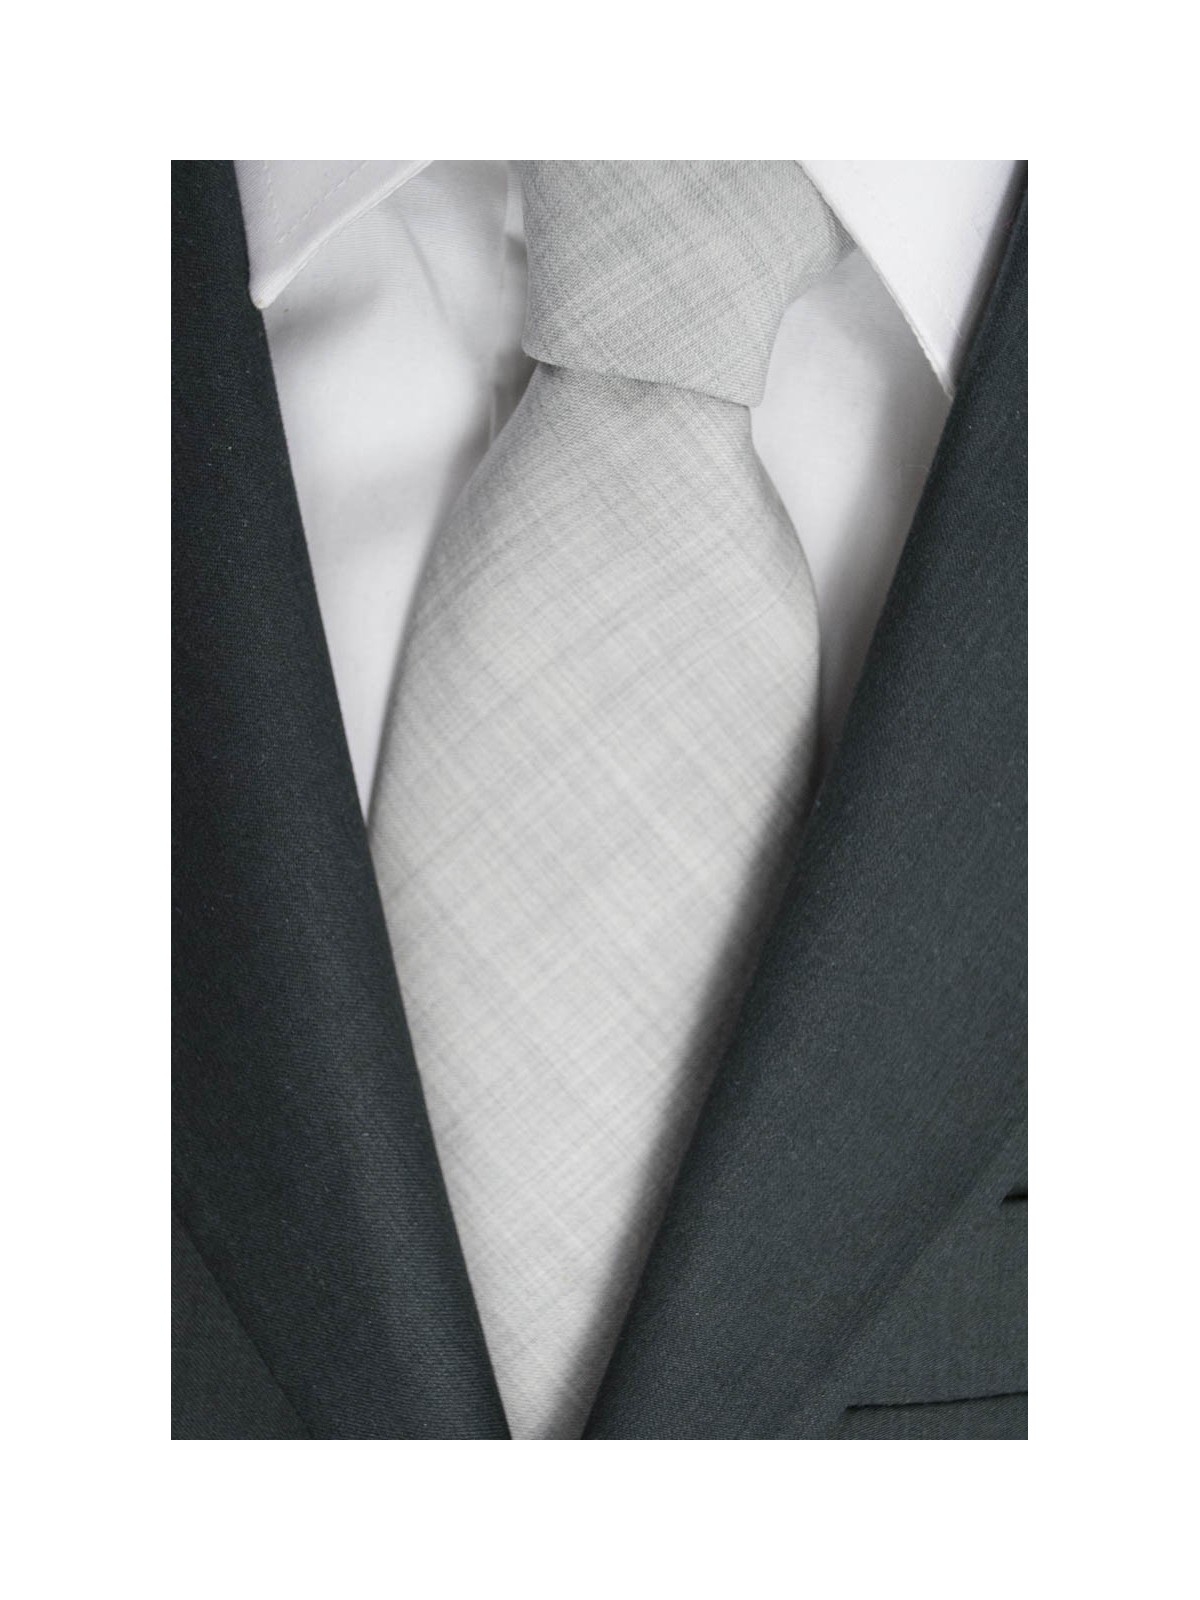 Krawatte Grau Chiato FilaFil Matt - 100% Reine Wolle - Made in Italy